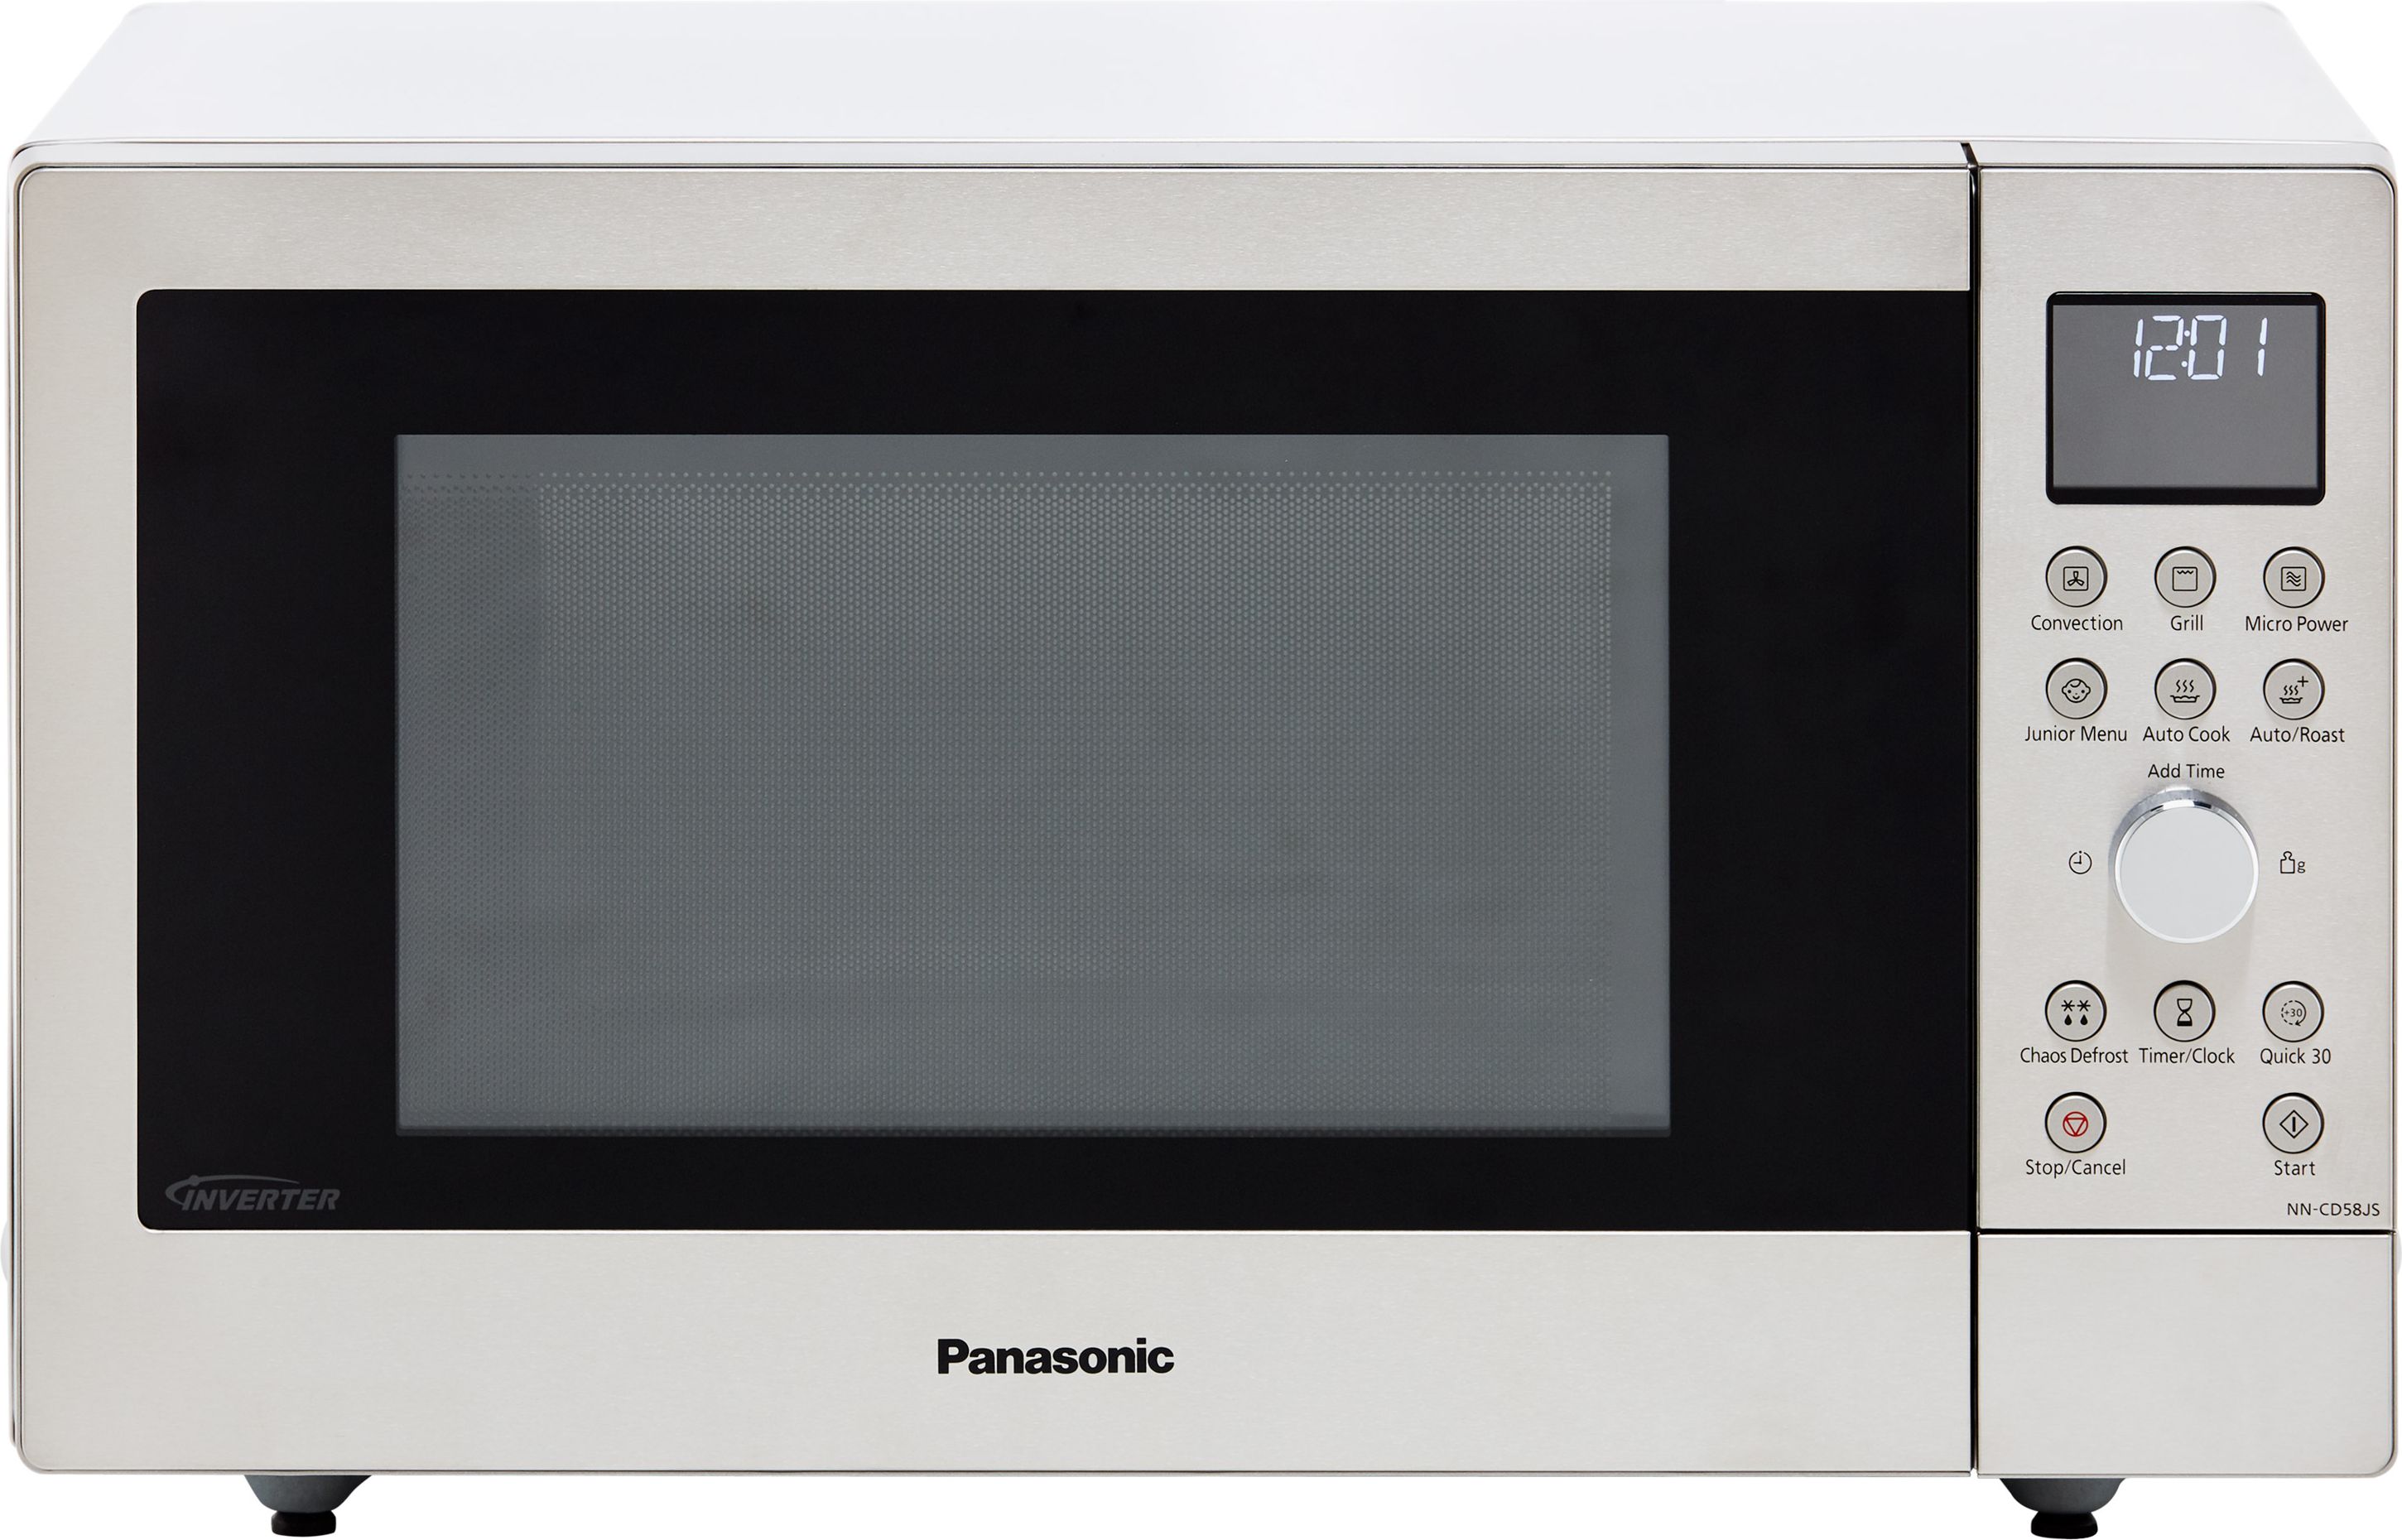 Panasonic NN-CD58JSBPQ Freestanding 31cm Tall Microwave - Stainless Steel, Stainless Steel